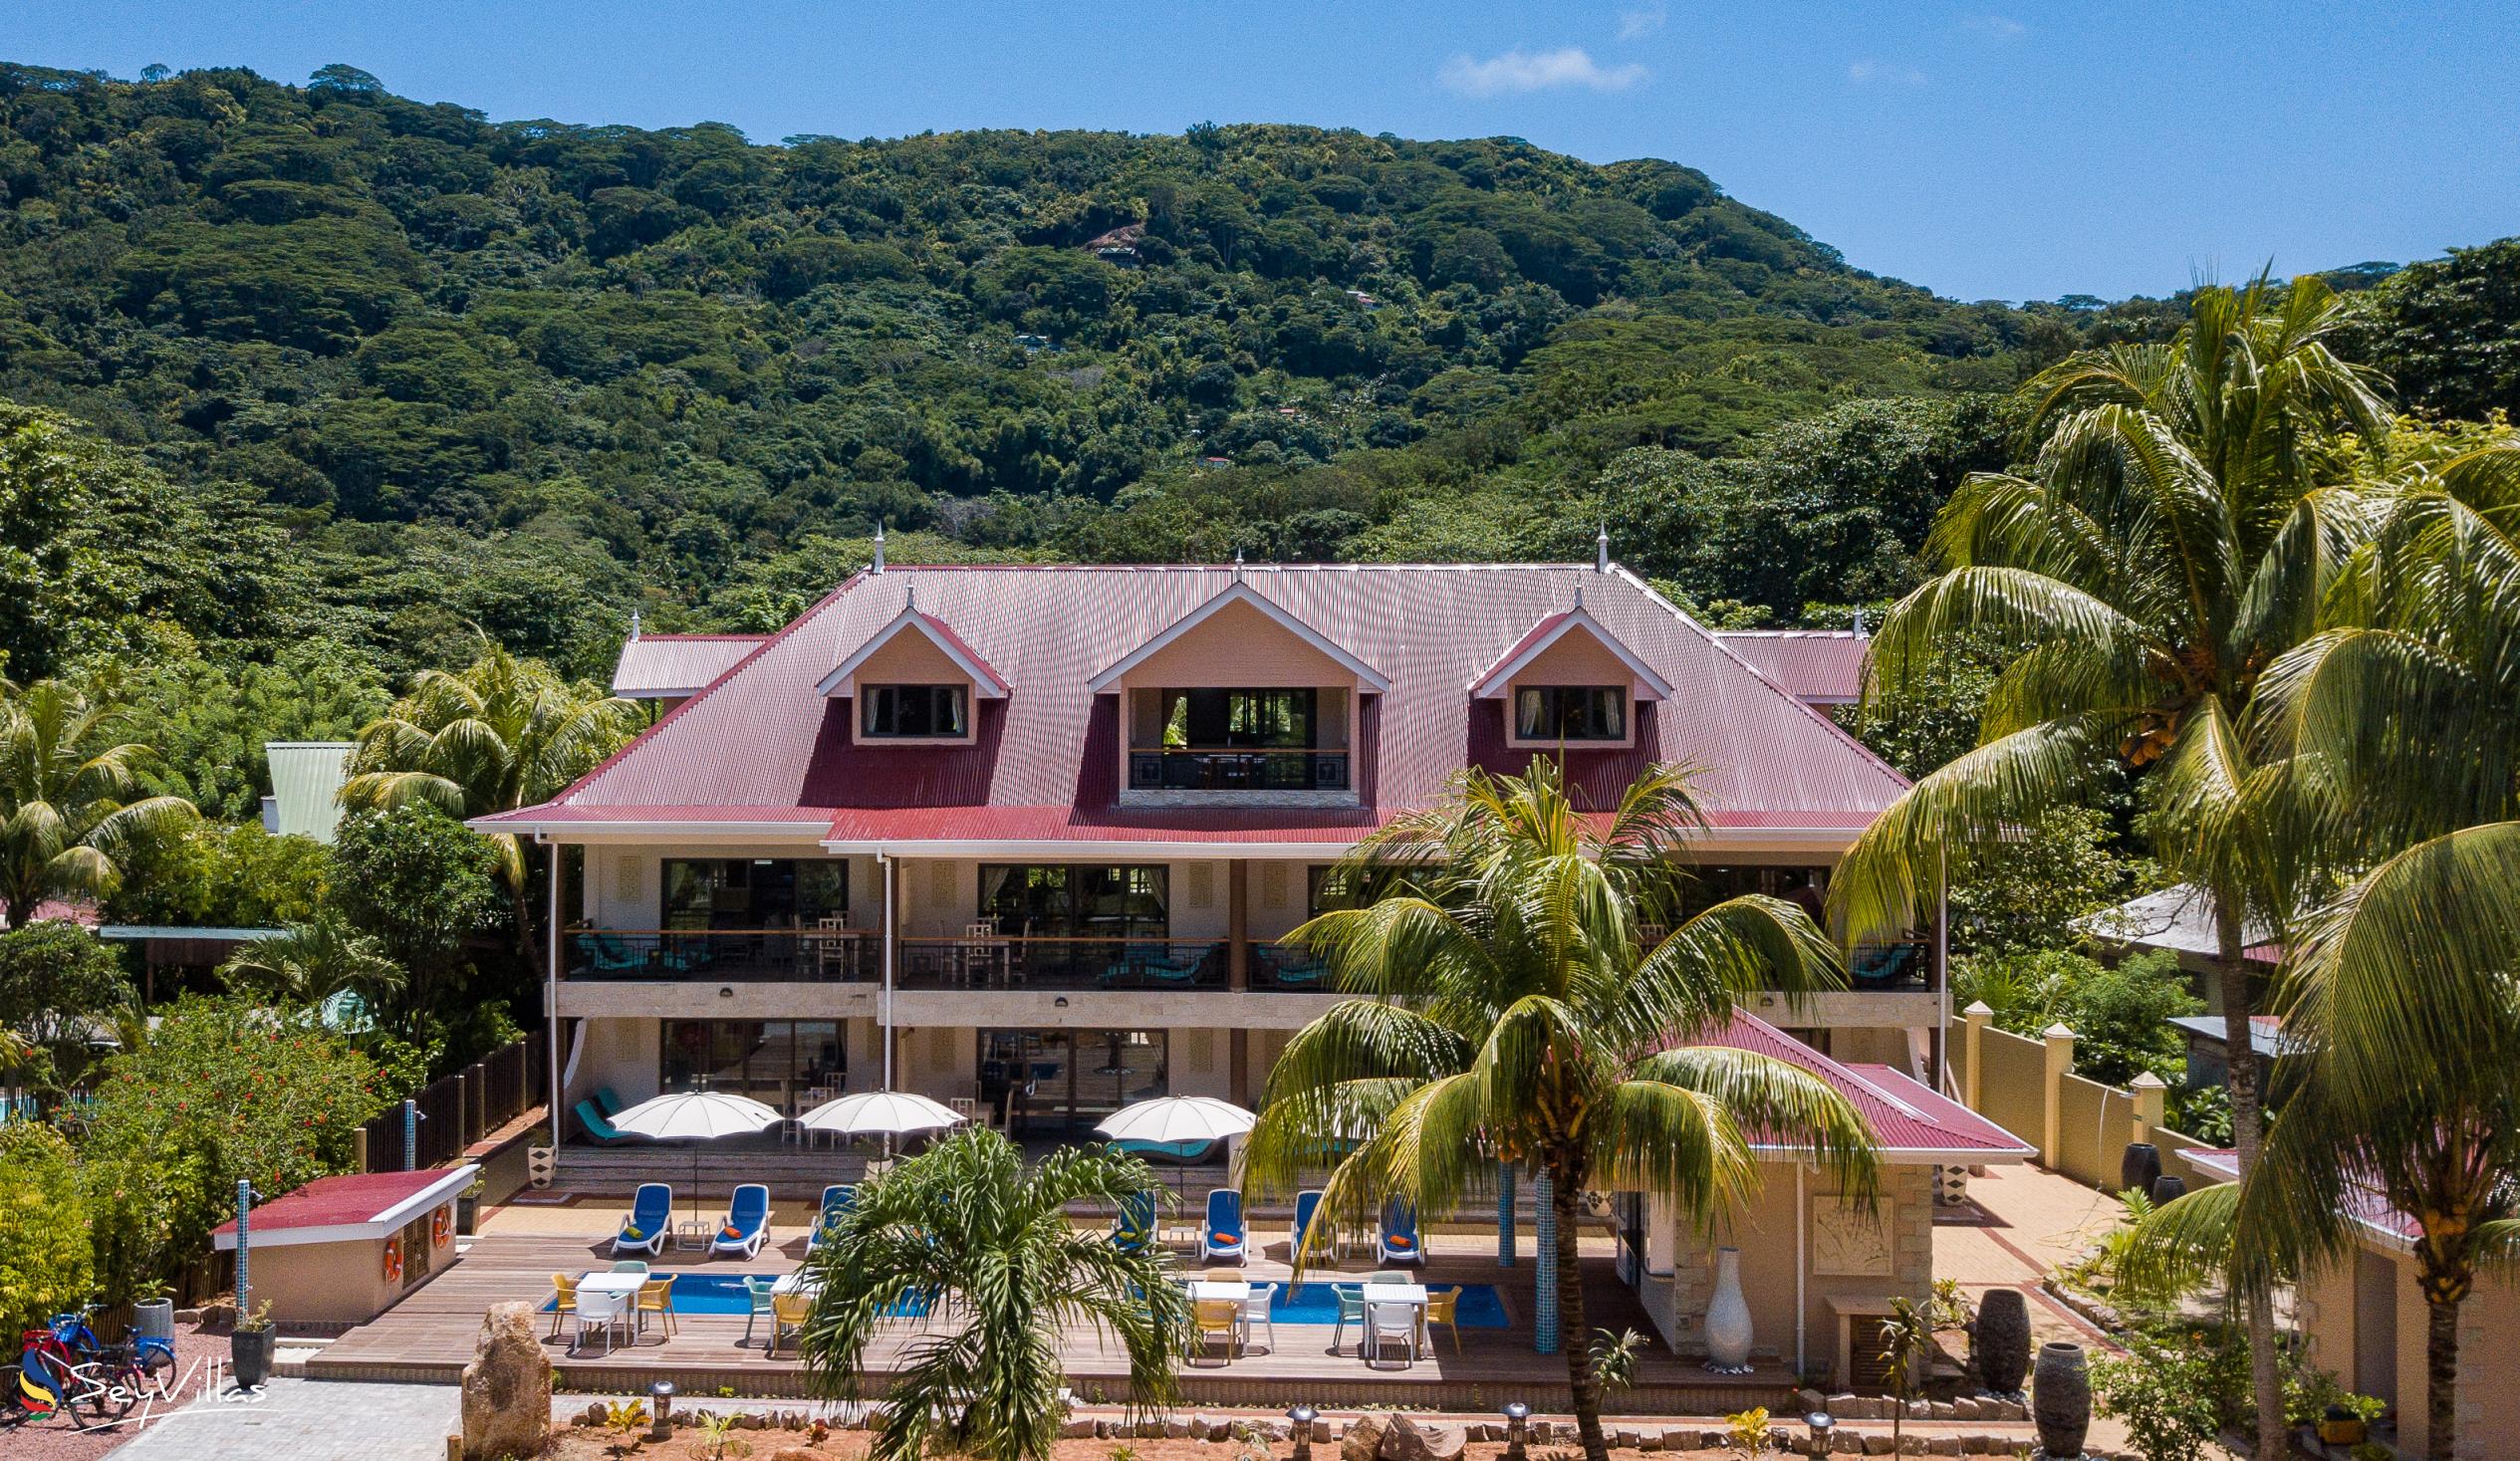 Foto 13: Casa de Leela - Aussenbereich - La Digue (Seychellen)